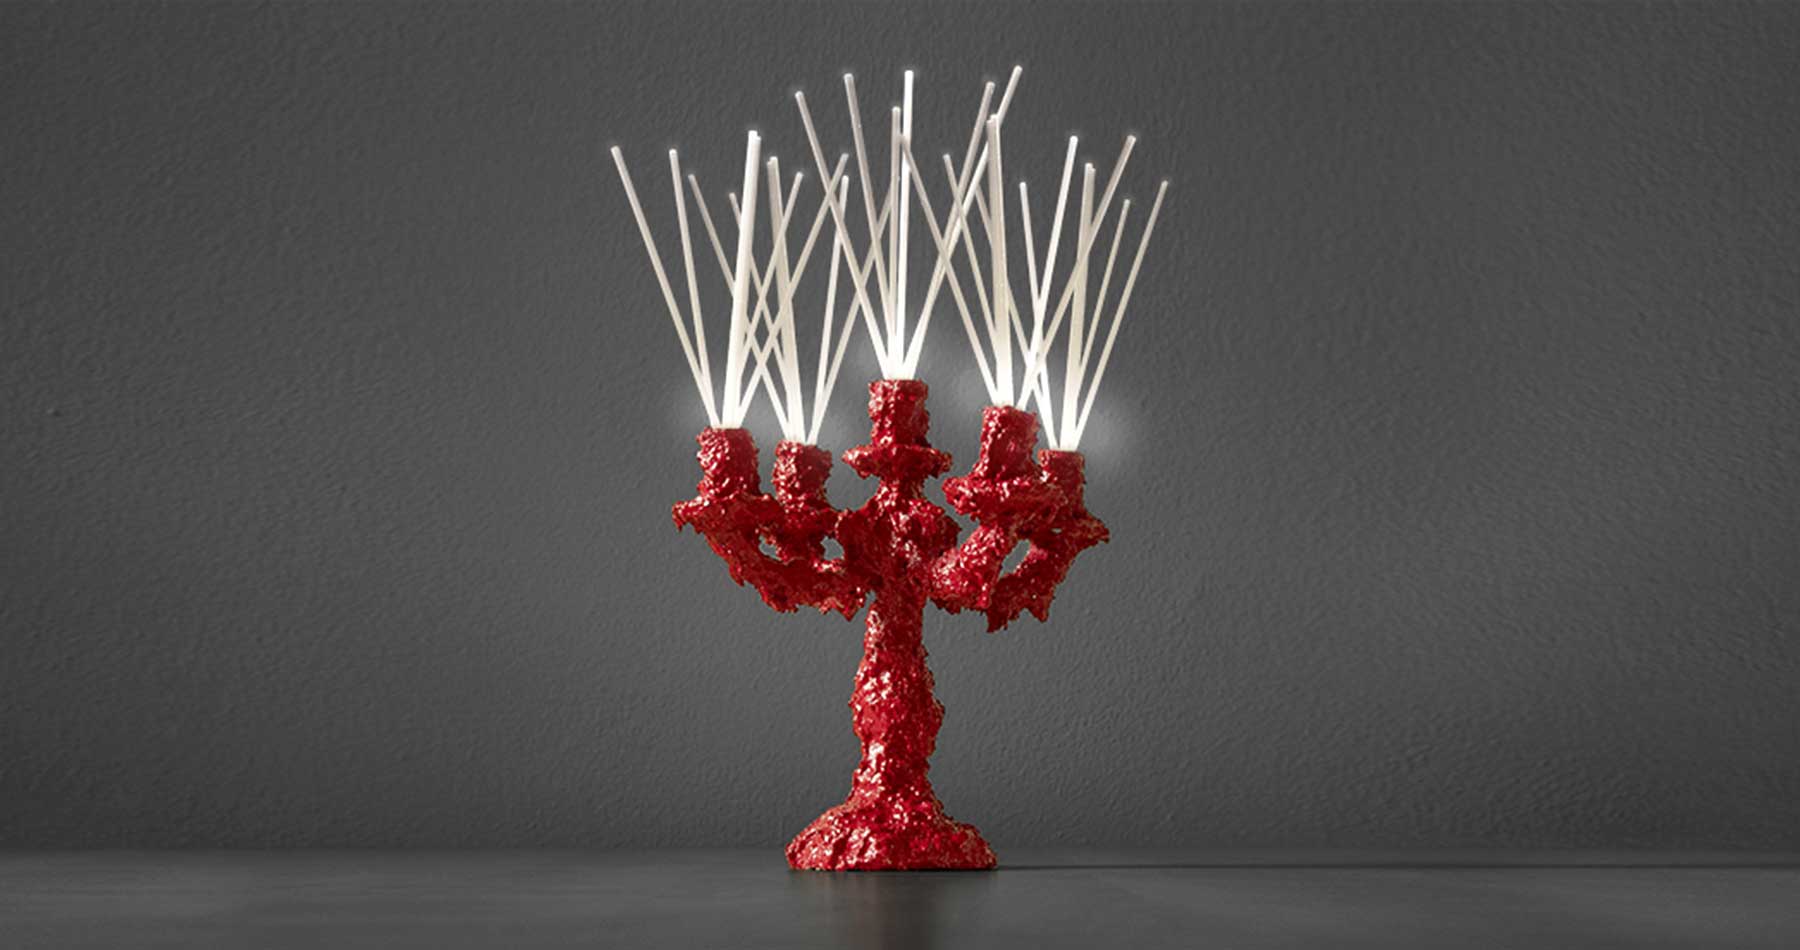 Lamp Secret light, red, photo 1, design by Guerraz, production by LuceControCorrente